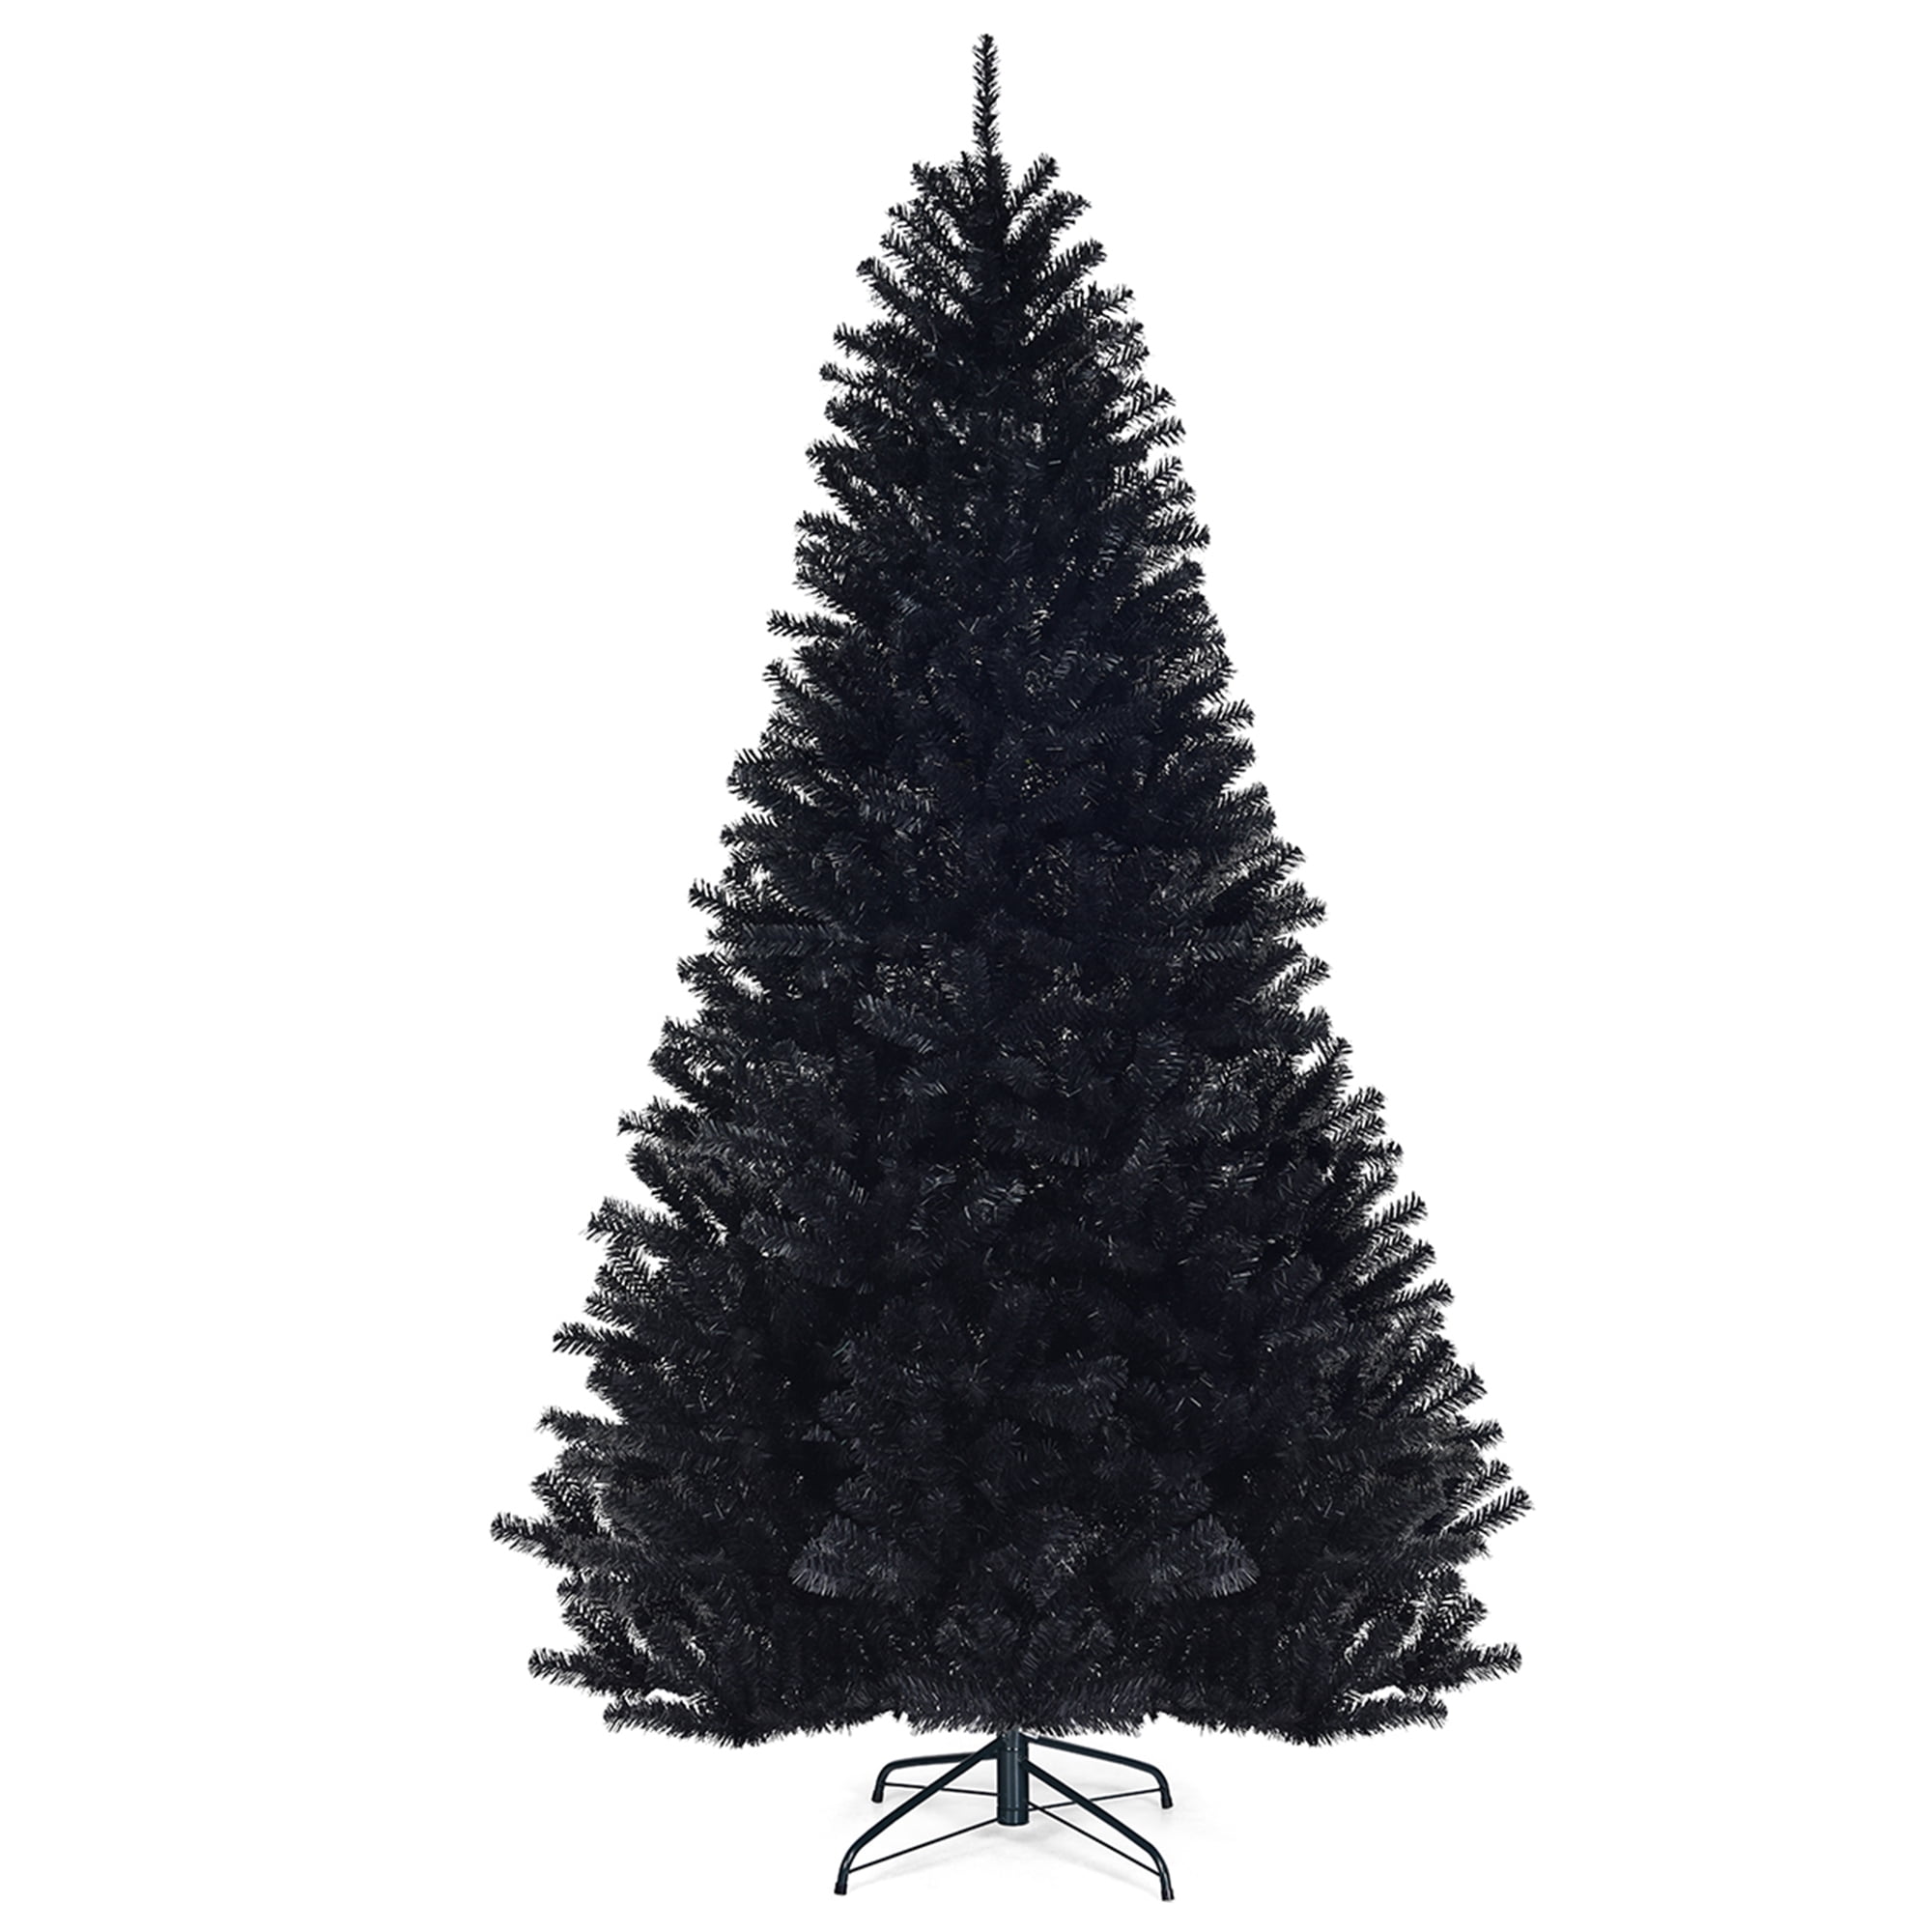 Black Christmas Trees 2021 - Where to Buy a Black Christmas Tree